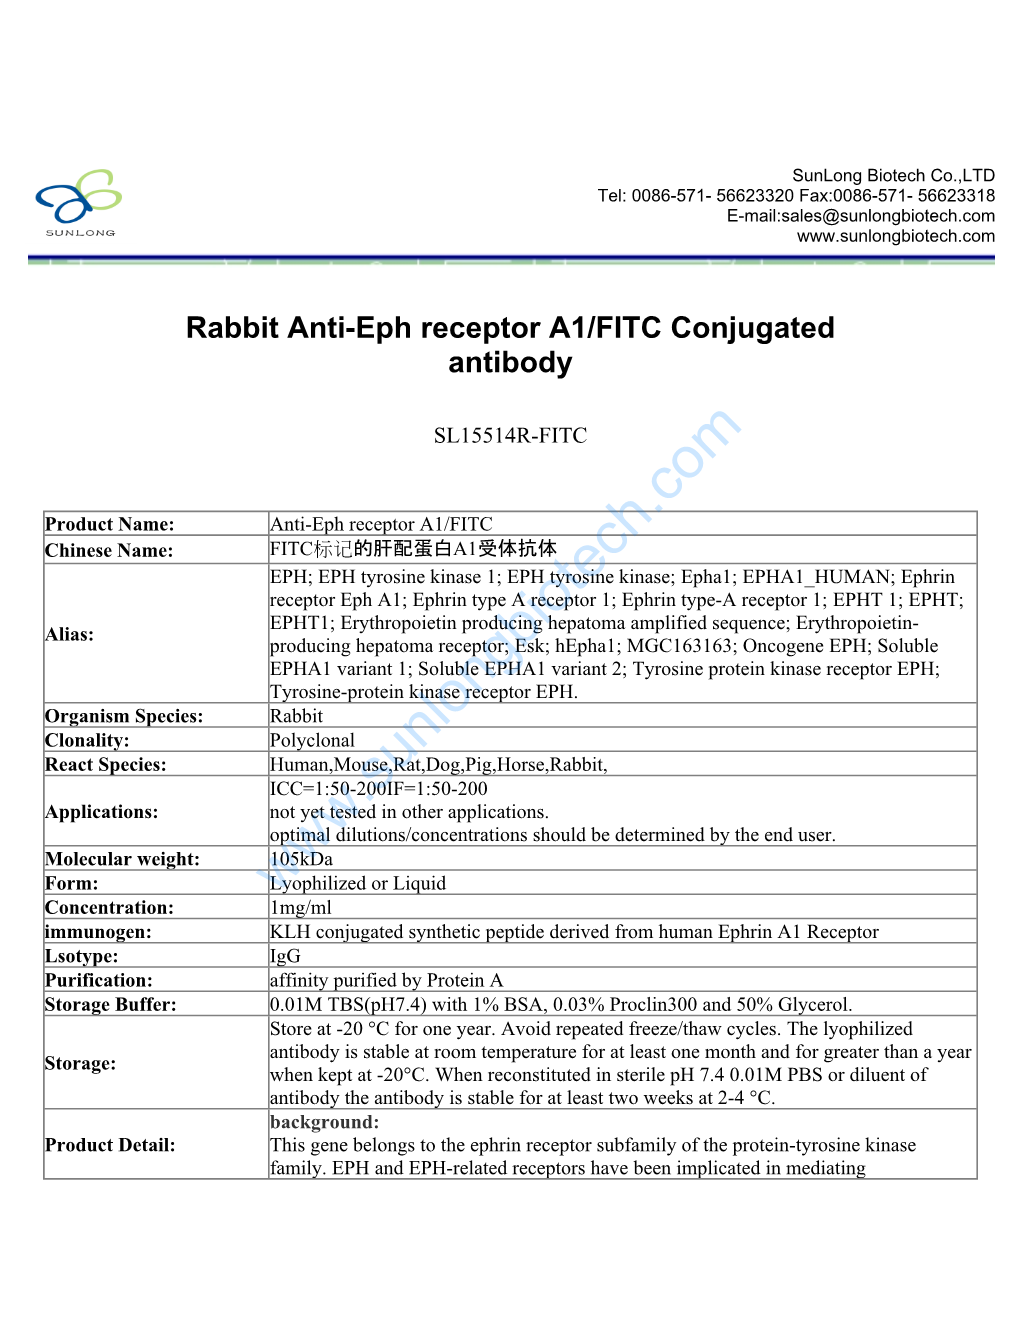 Rabbit Anti-Eph Receptor A1/FITC Conjugated Antibody